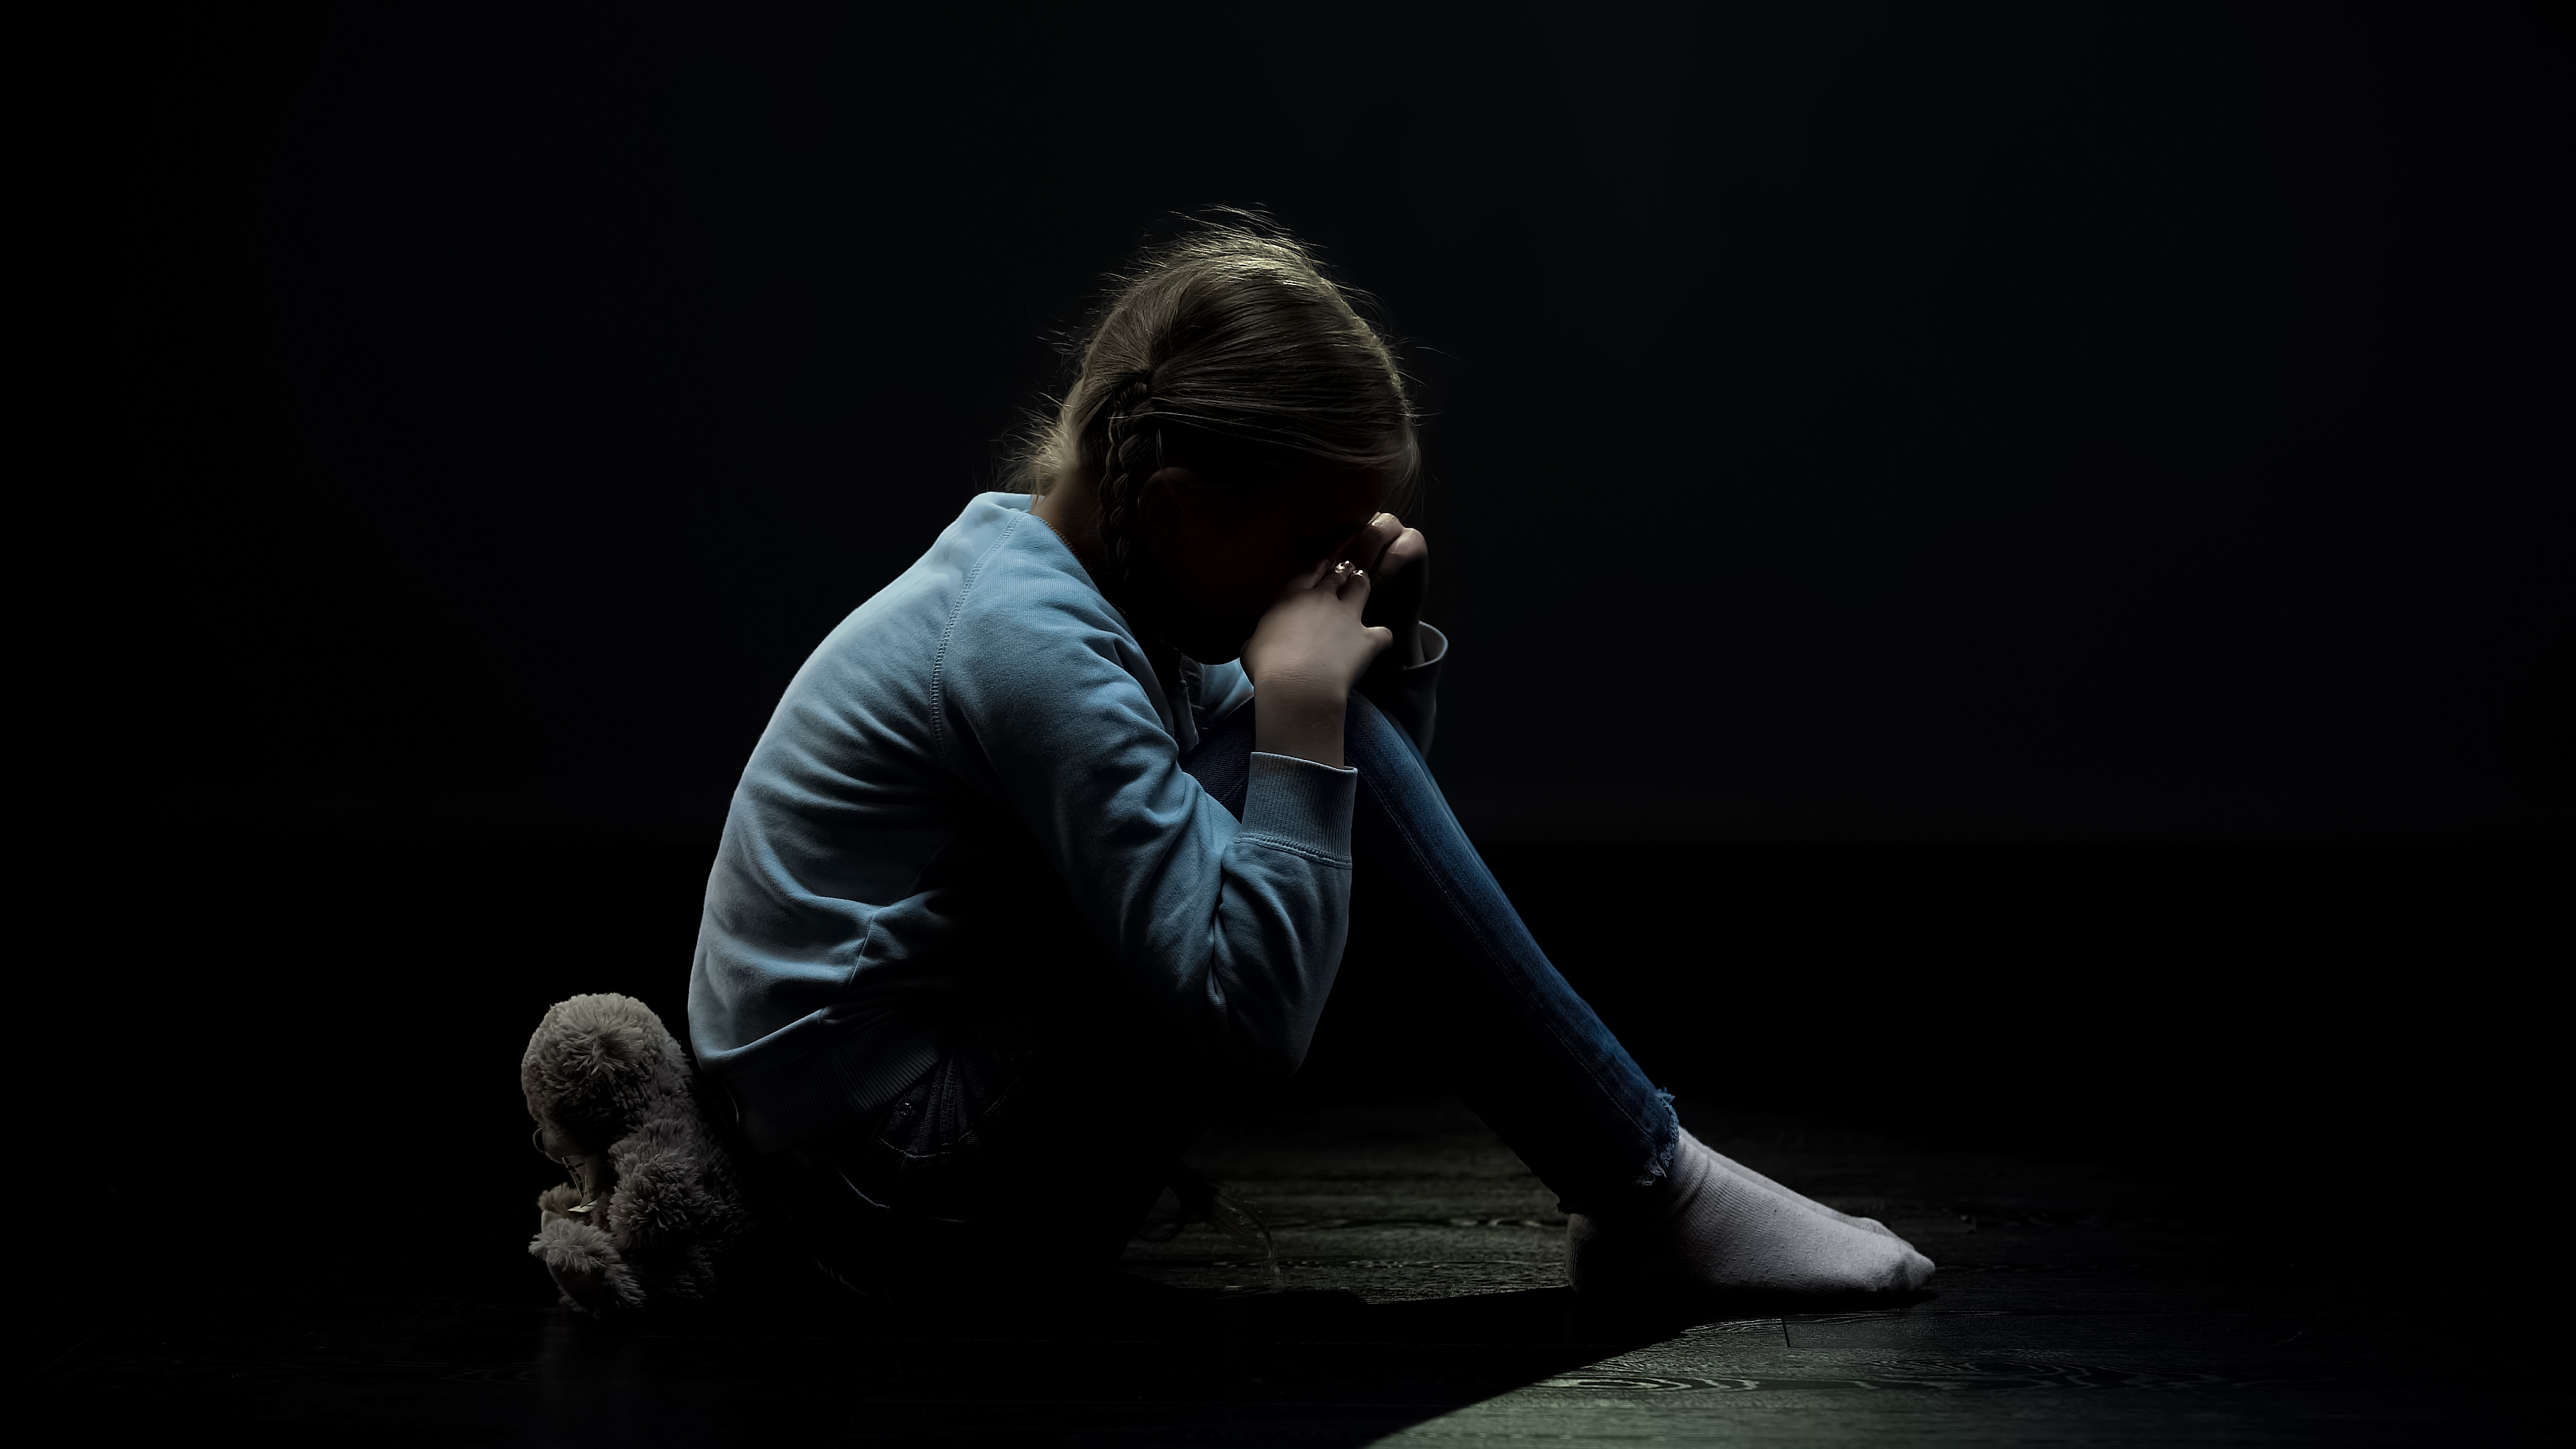 Sad girl child in basement | Source: Shutterstock.com